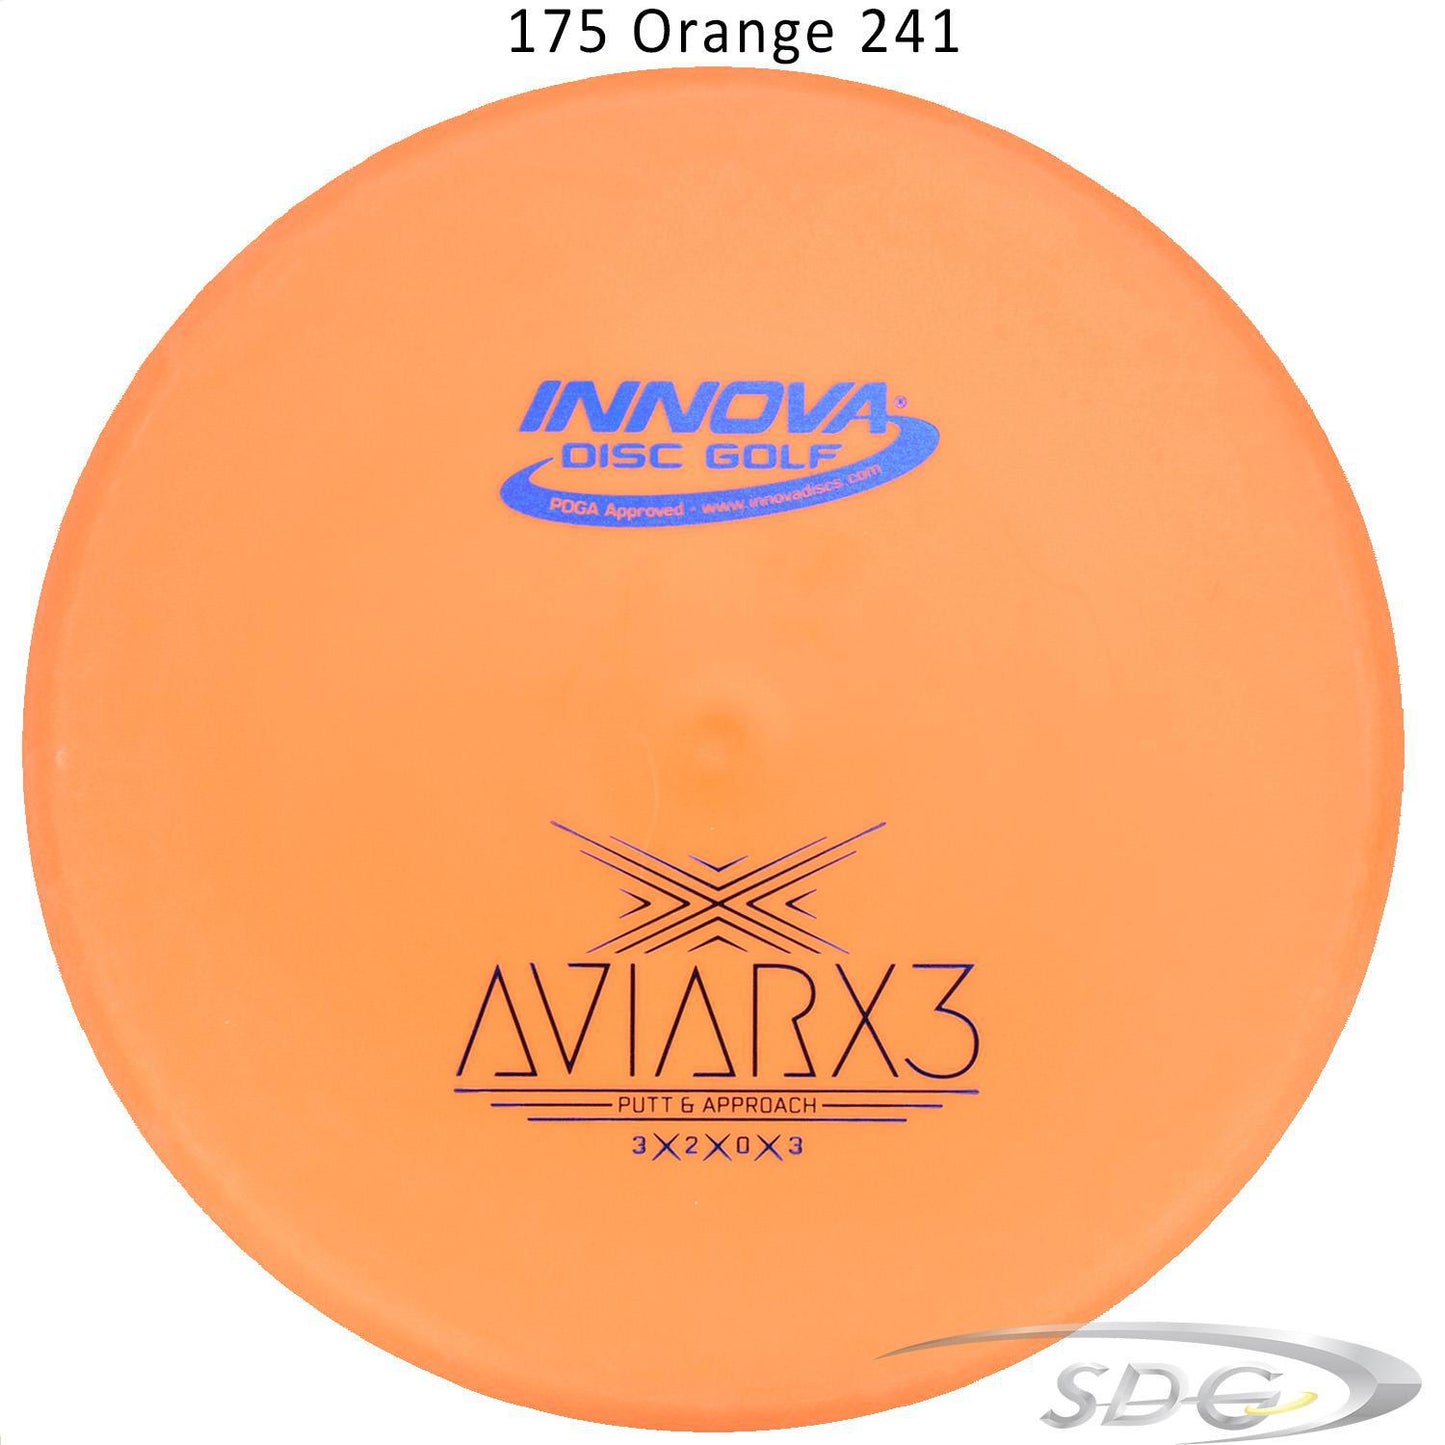 innova-dx-aviarx3-disc-golf-putter 175 Orange 241 